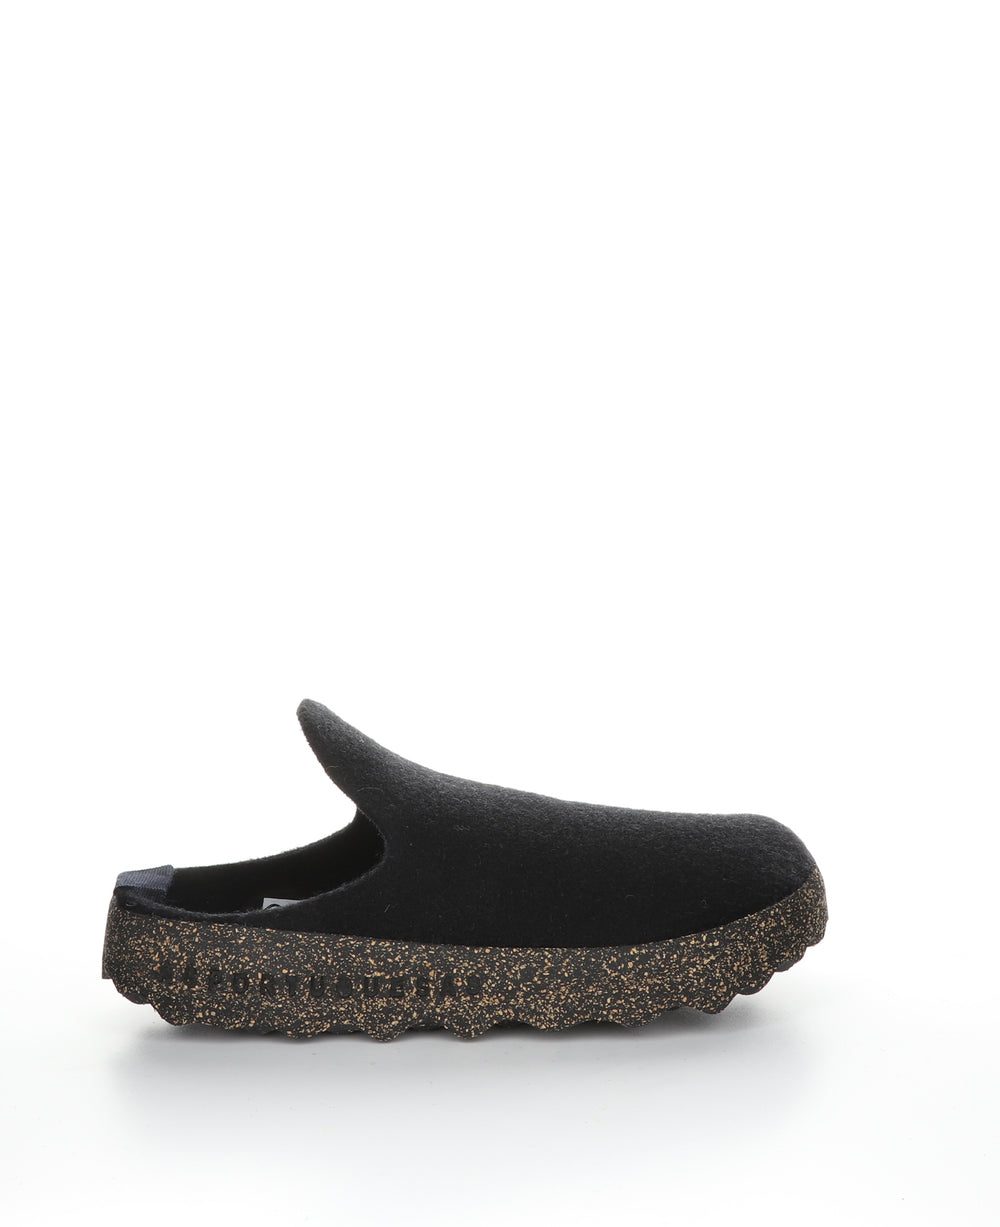 COME061ASPM Black Round Toe Shoes|COME061ASPM Chaussures à Bout Rond in Noir